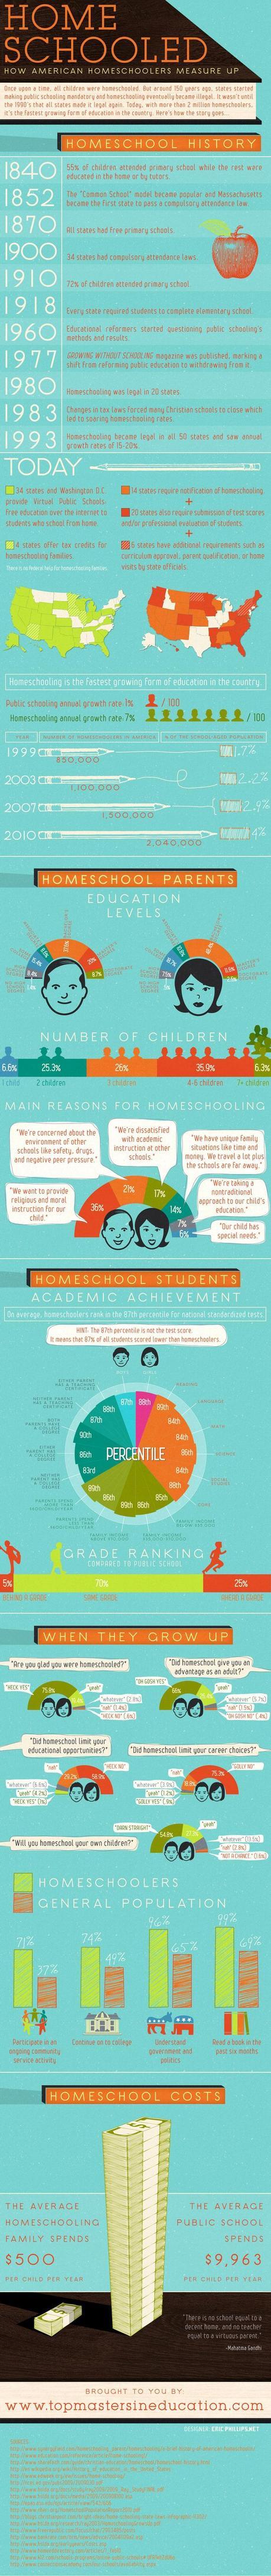 Homeschooled: How American Homeschoolers Measure Up